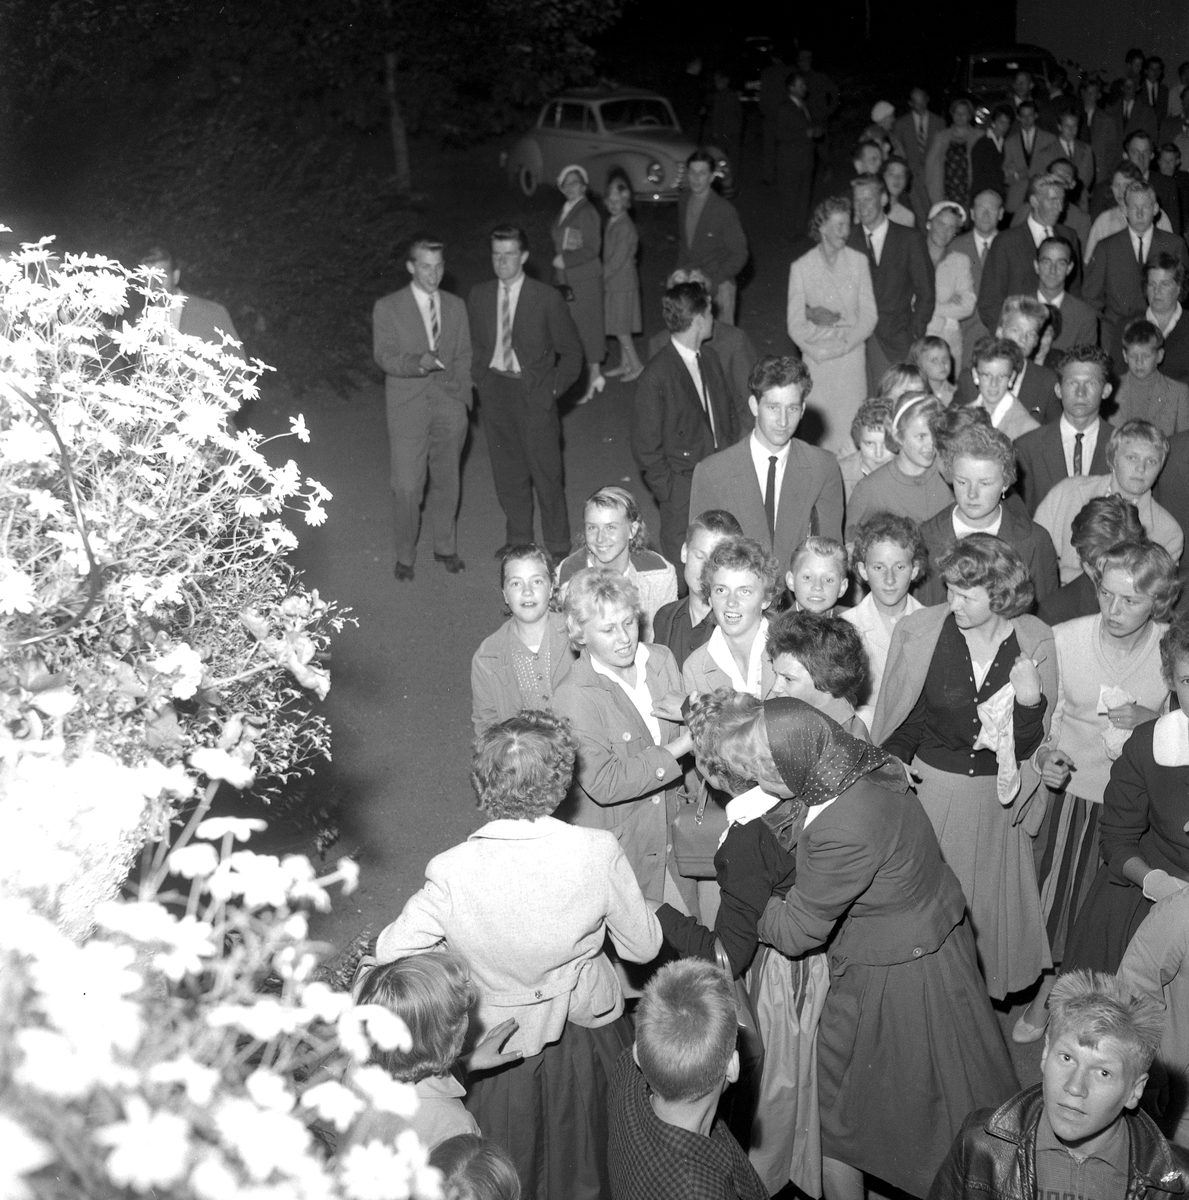 Rockgala i Folkets park.
8 september 1958.